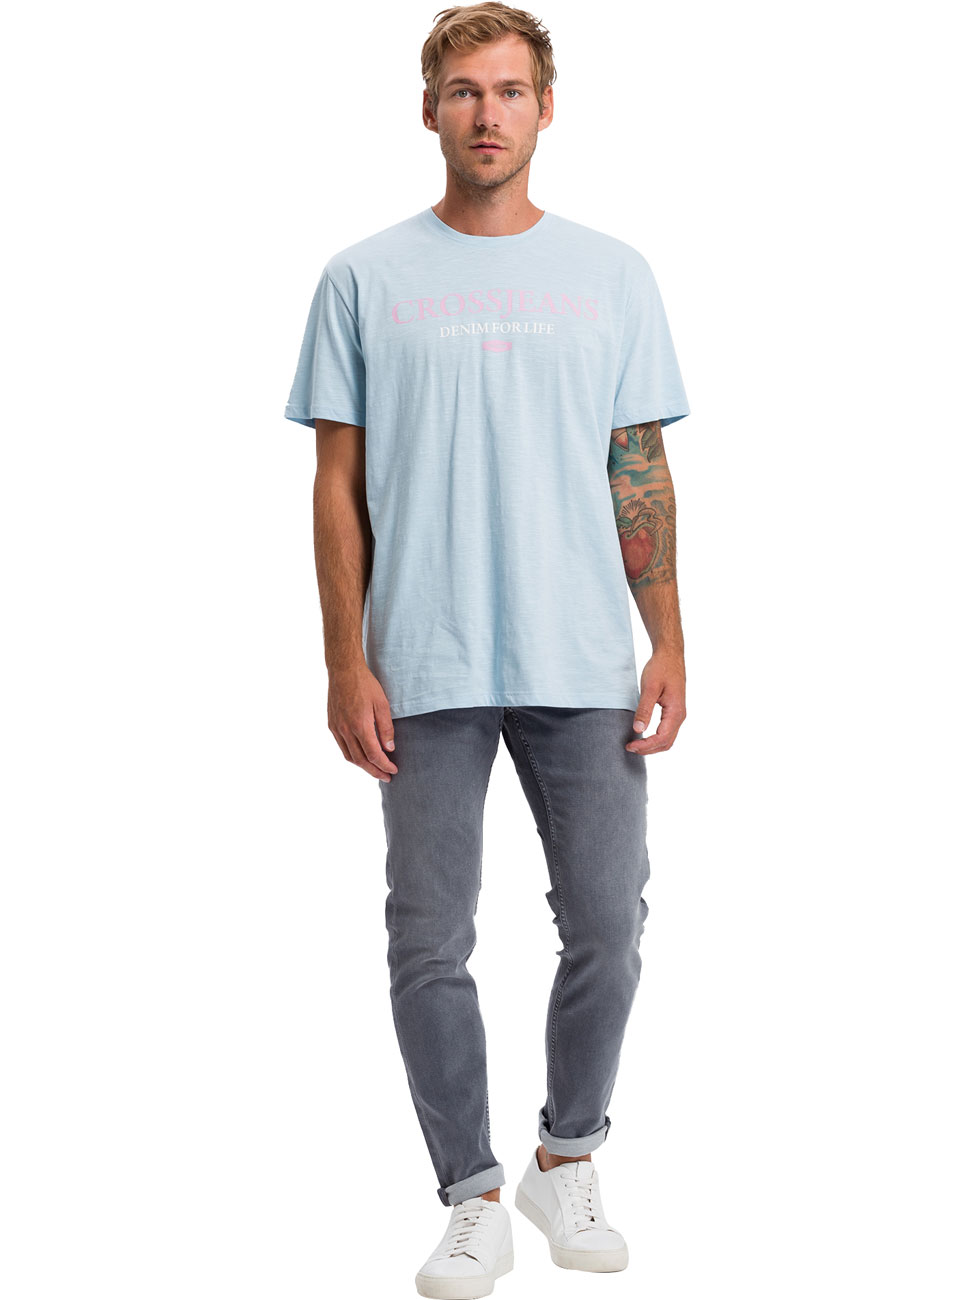 Cross Jeans Herren Jeans Jimi - Slim Tapered Fit - Grau - Light Grey günstig online kaufen